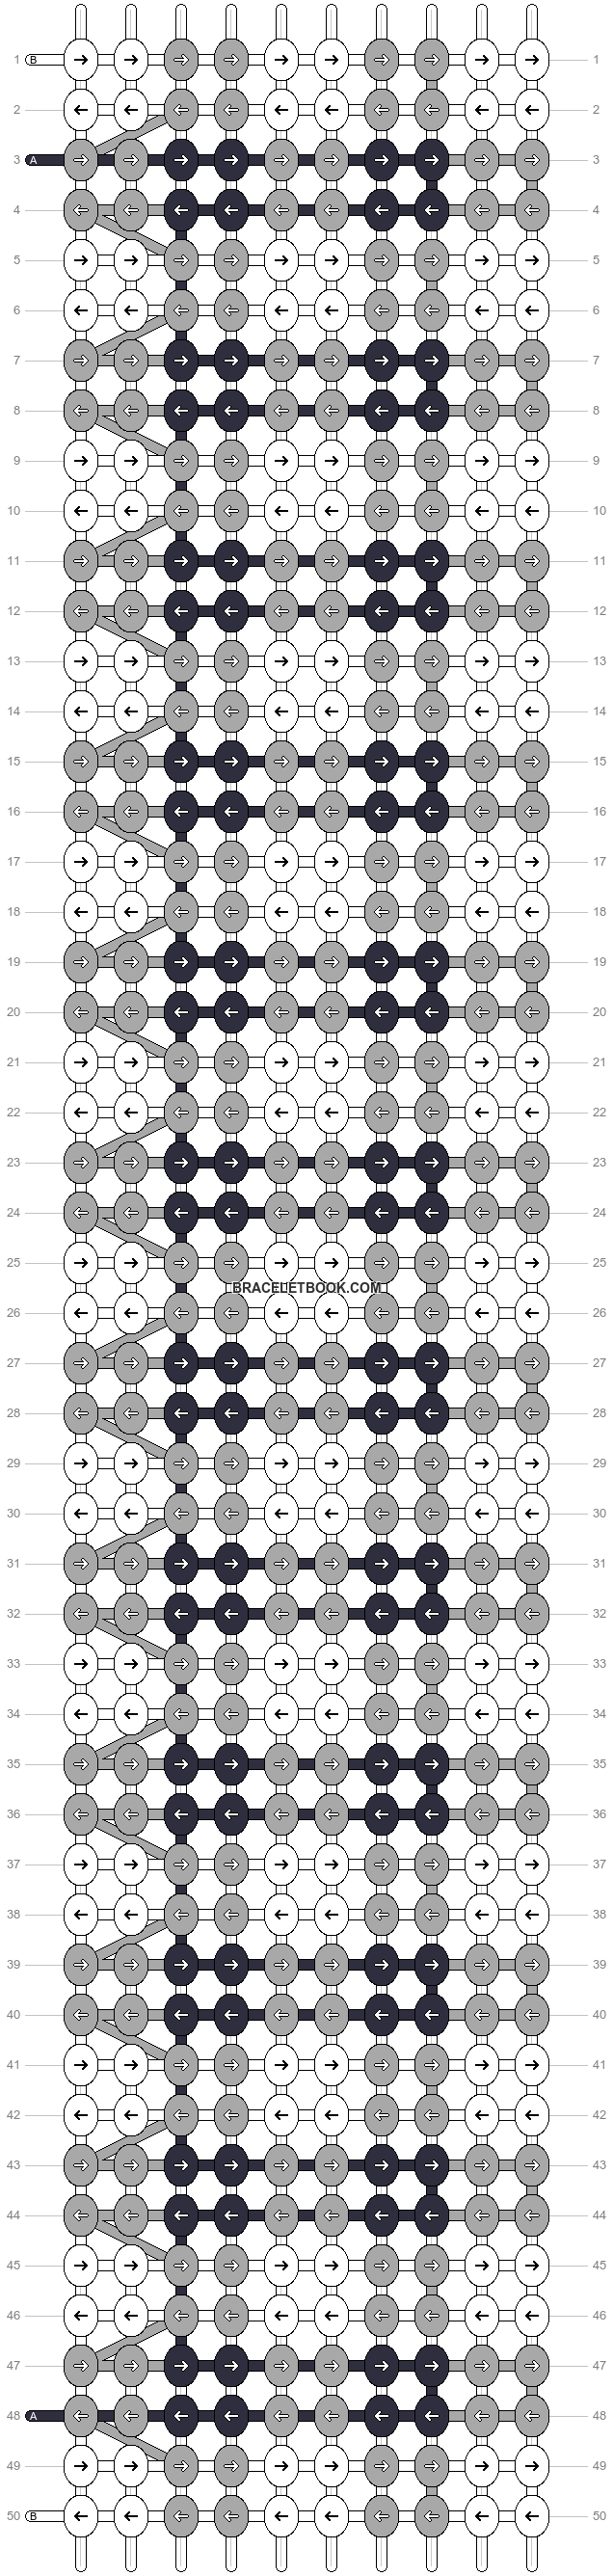 Alpha pattern #15051 variation #106236 pattern